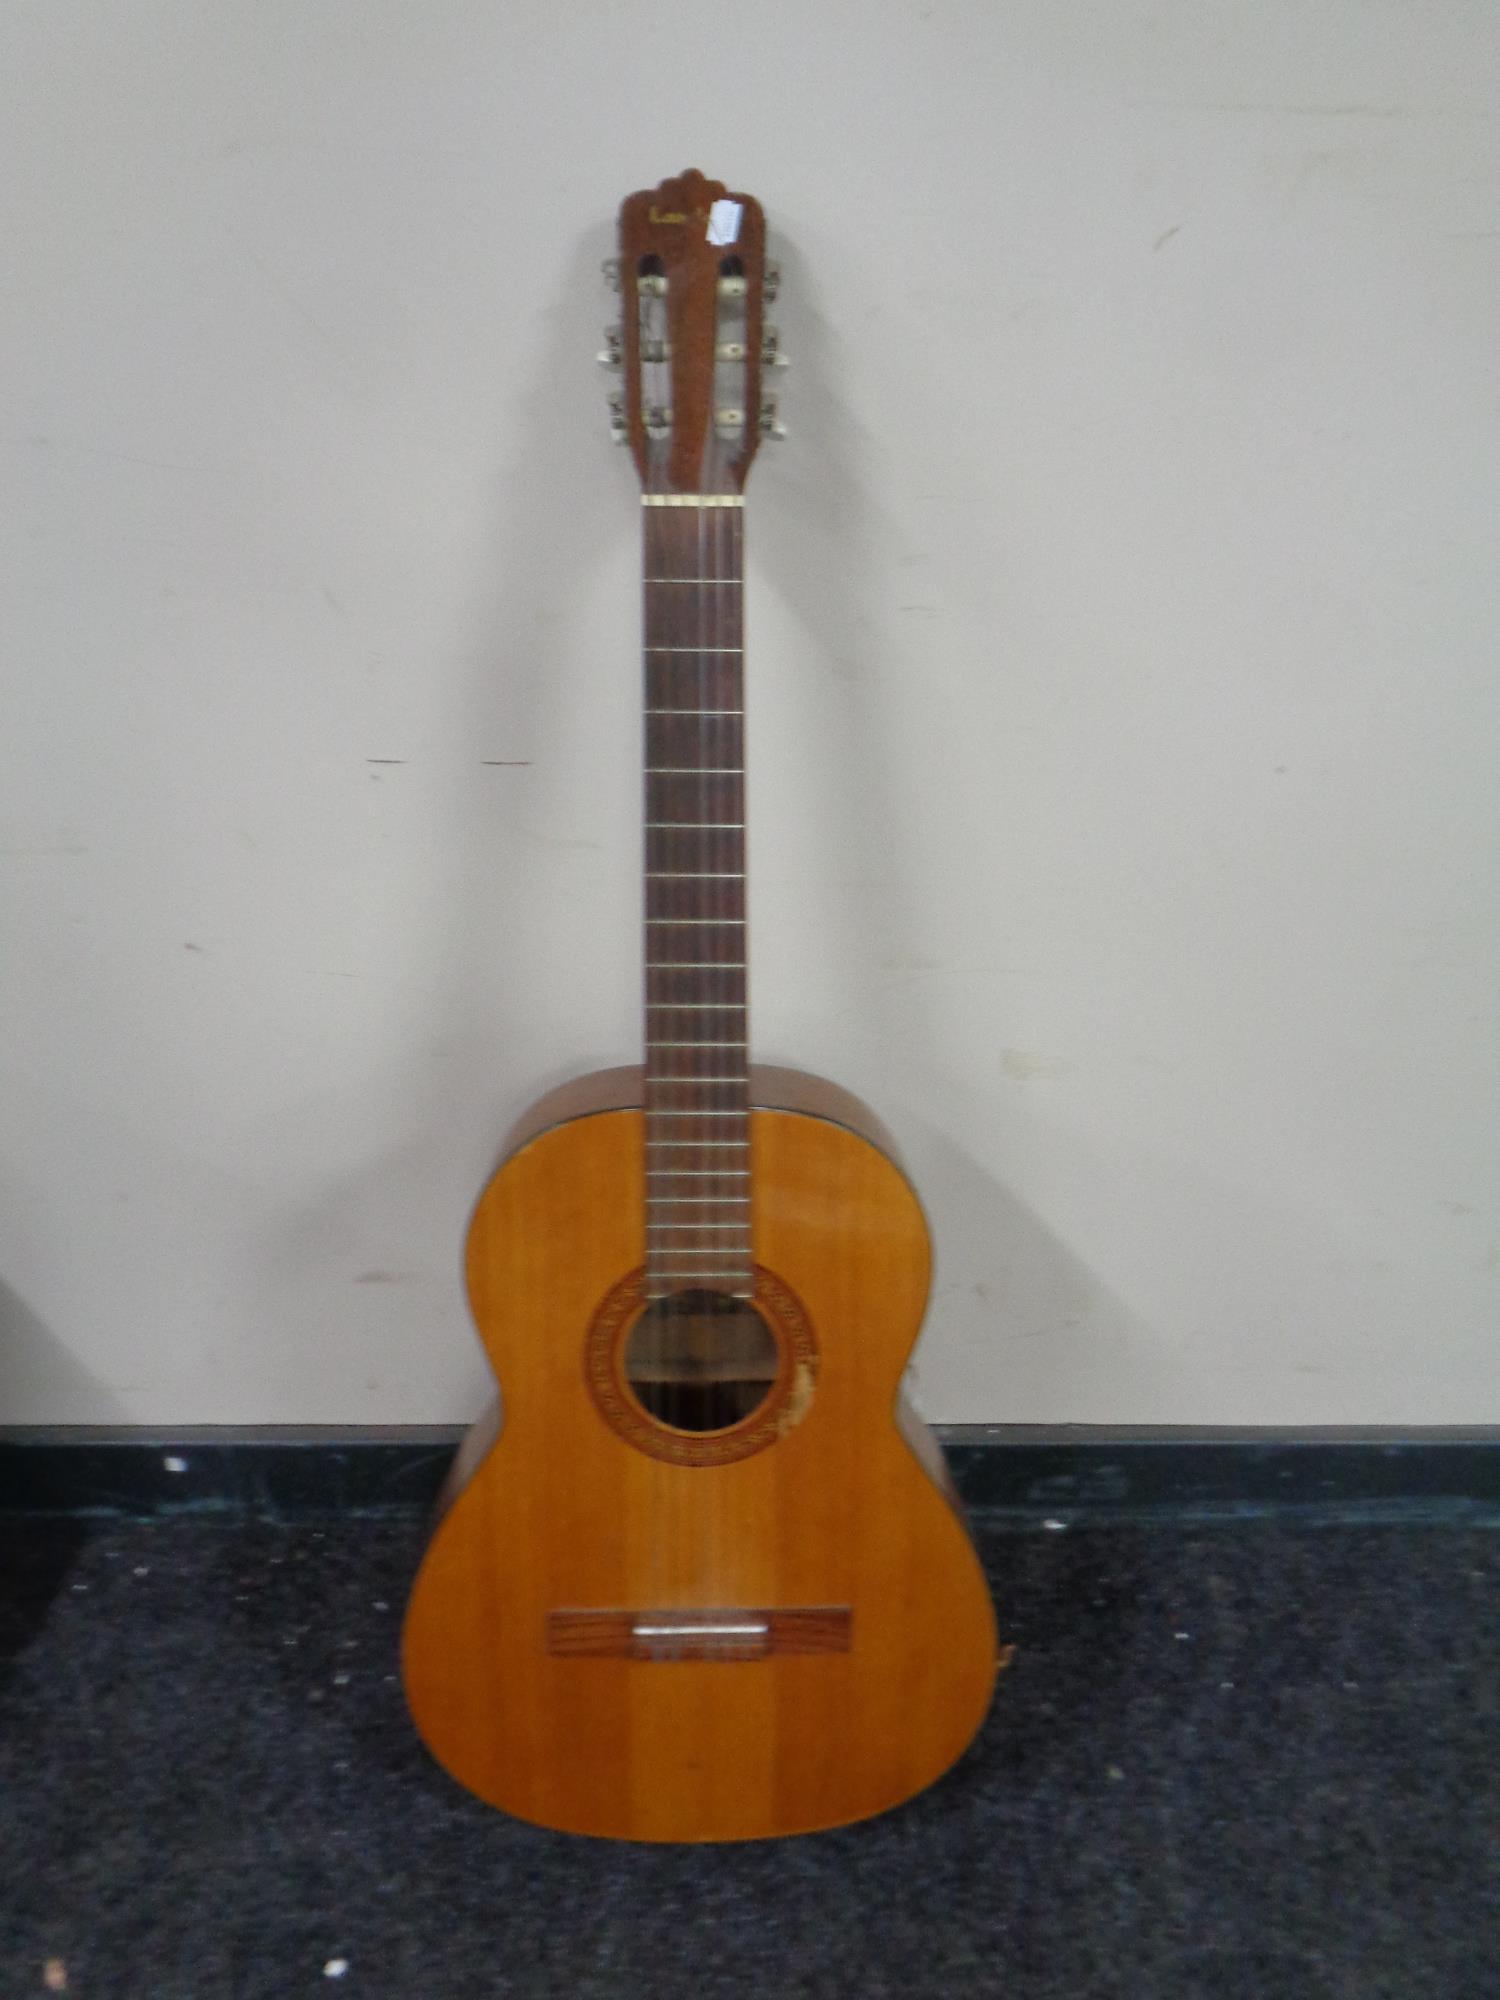 A Paramount acoustic guitar